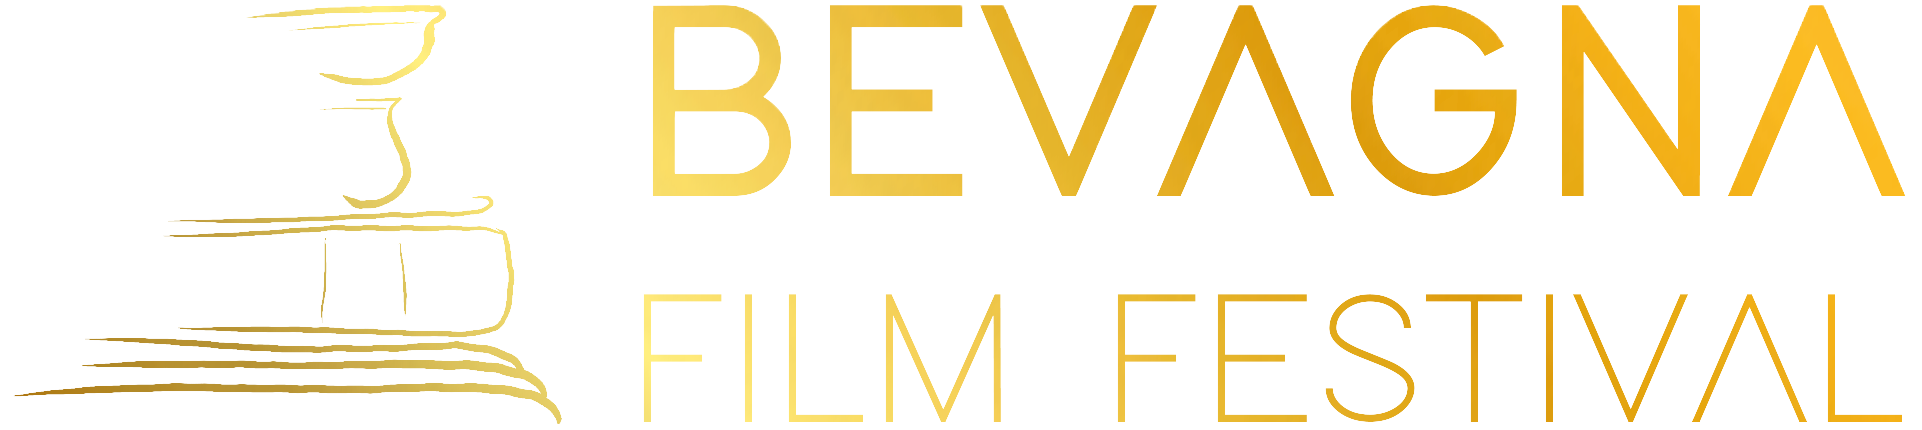 Bevagna Film Festival